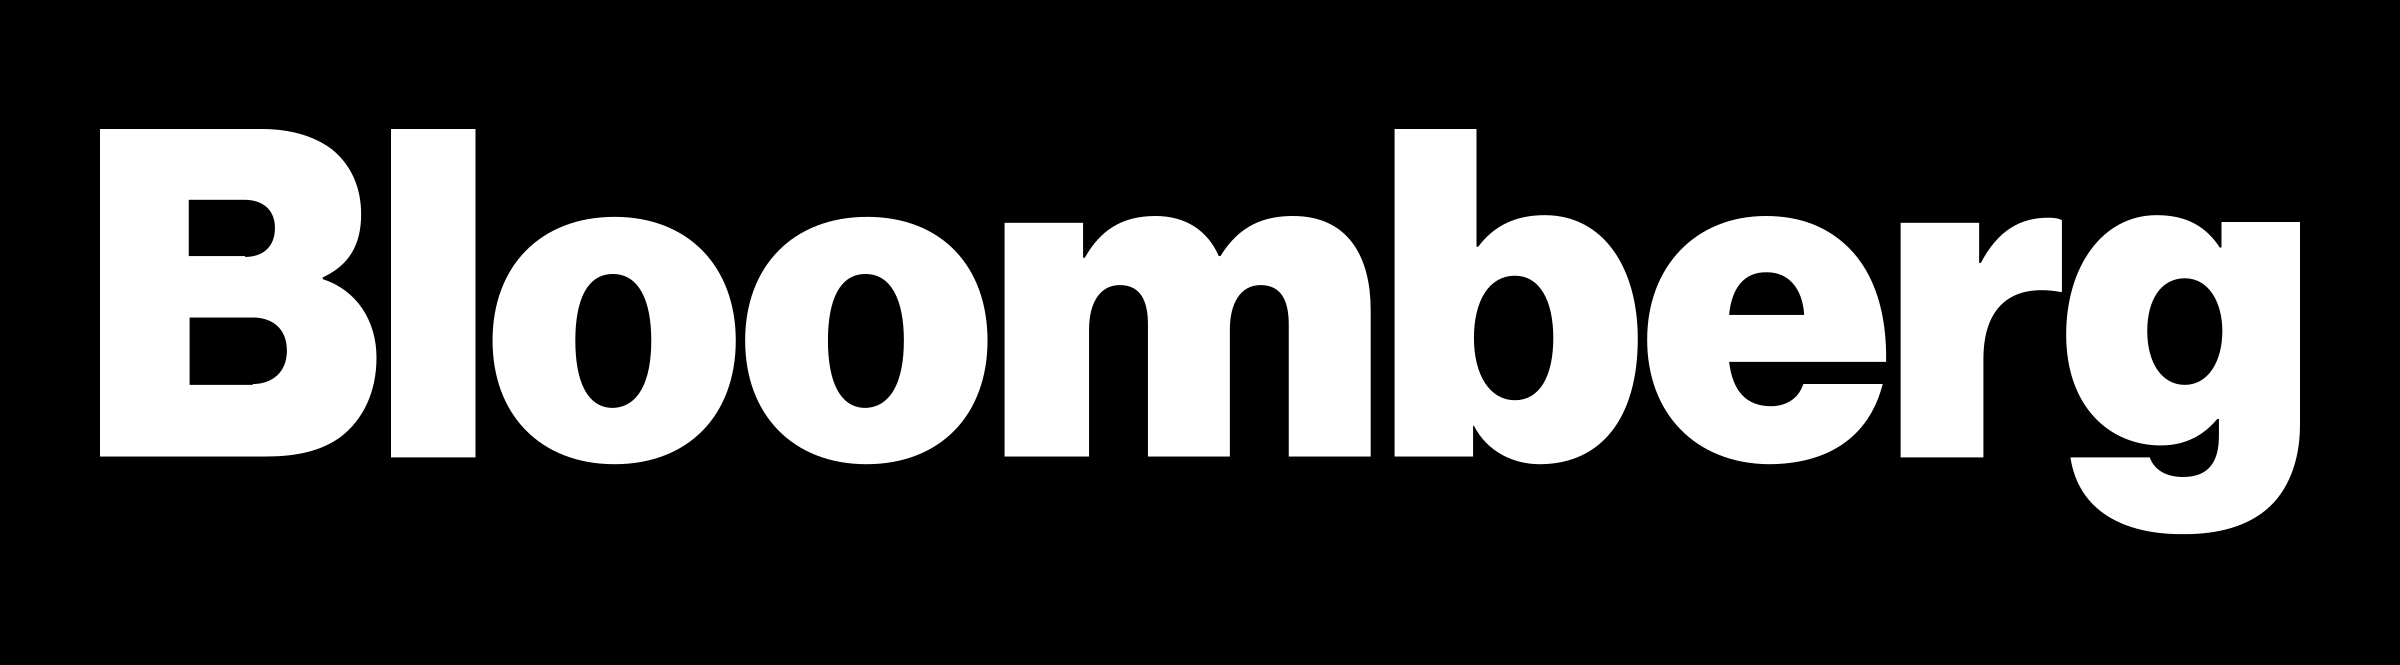 bloomberg-logo-white.png